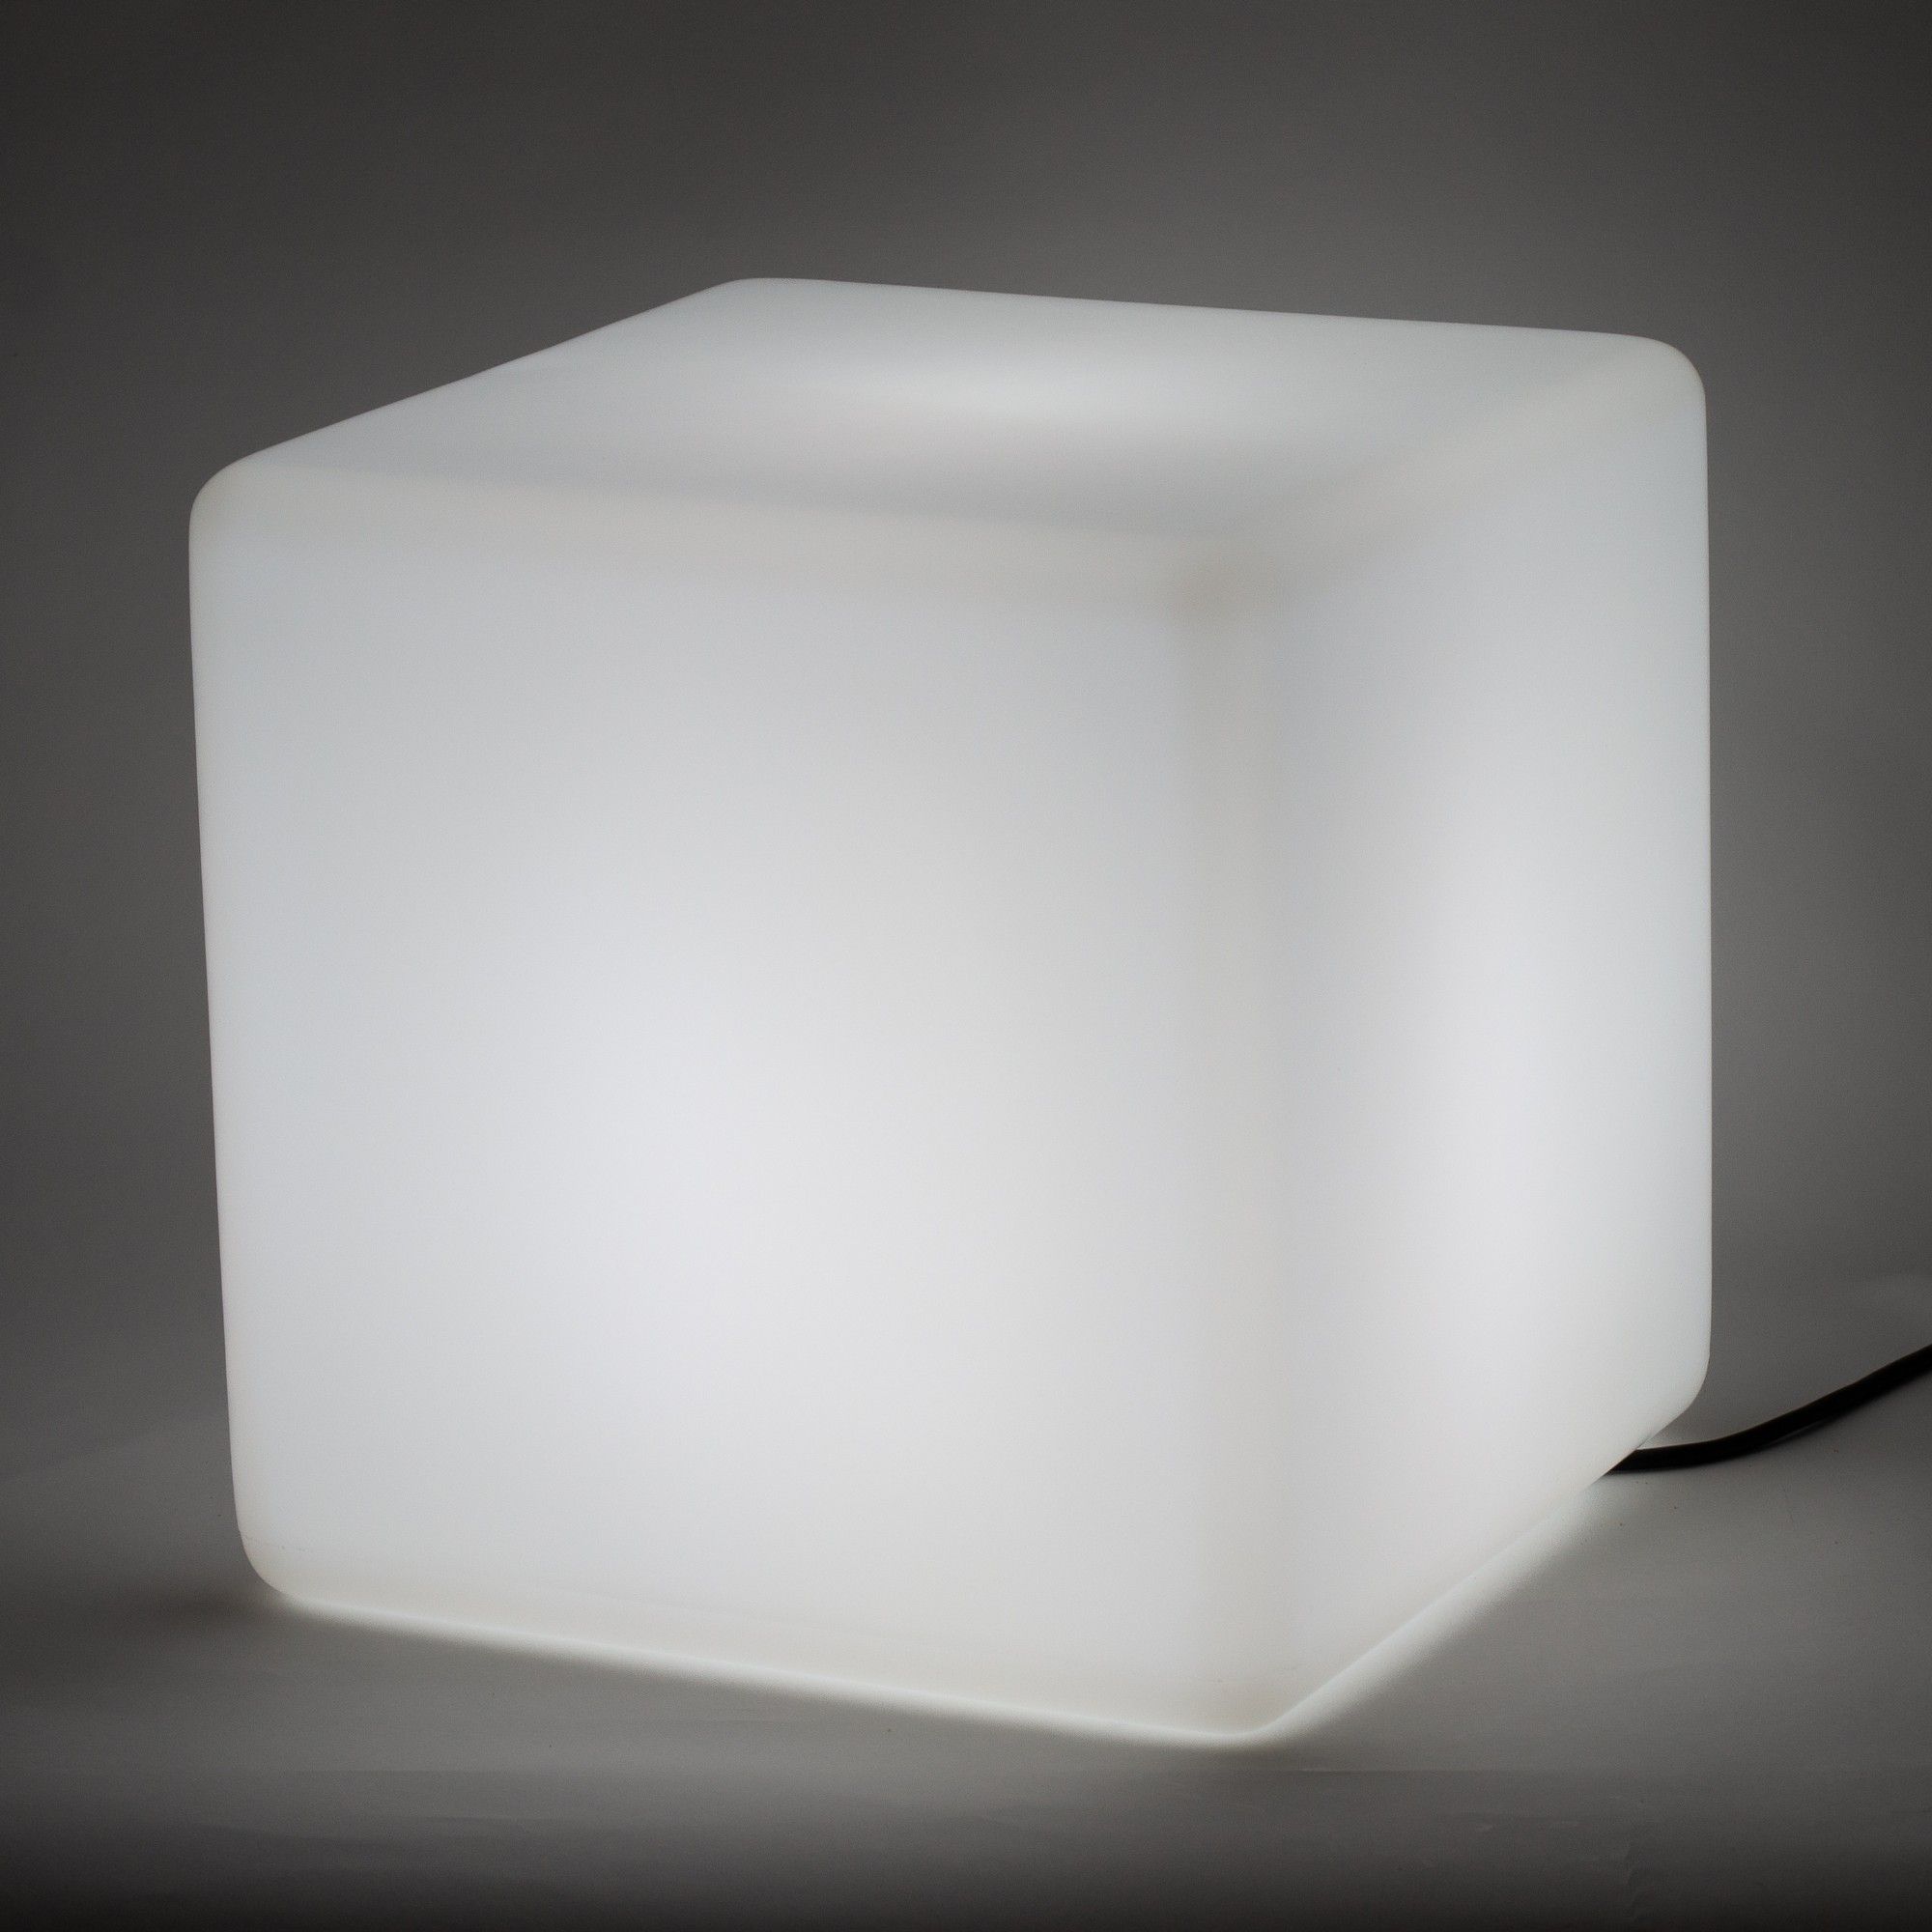 Cube Lights & Cube Lamps for Garden & Outdoor - Leuchtenking.de